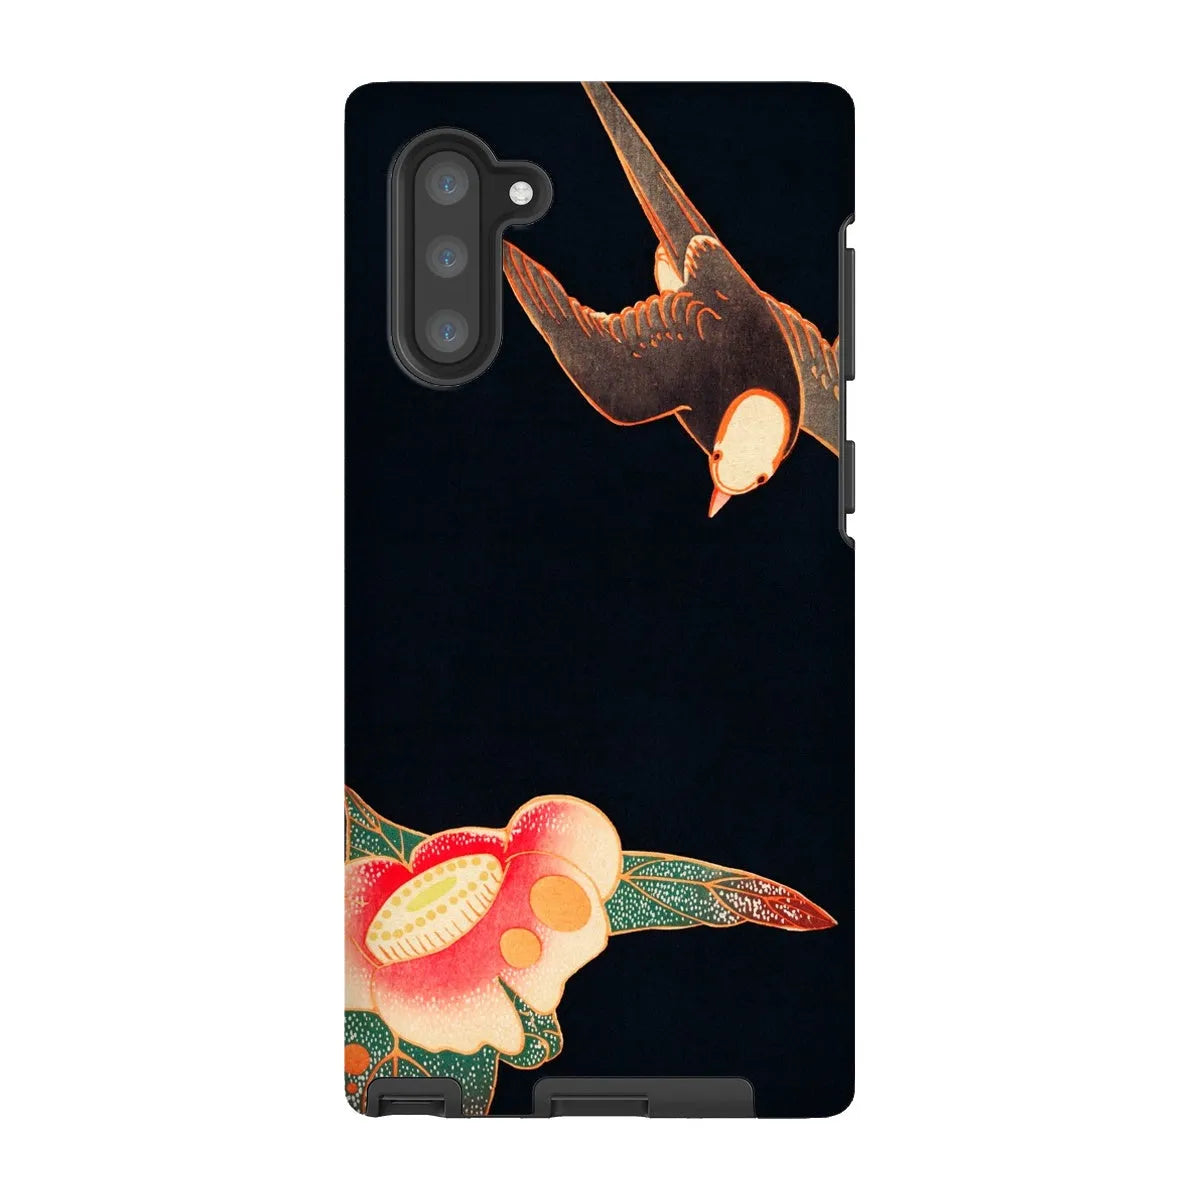 Swallow & Camellia - Meiji Era Art Phone Case - Ito Jakuchu - Samsung Galaxy Note 10 / Matte - Mobile Phone Cases